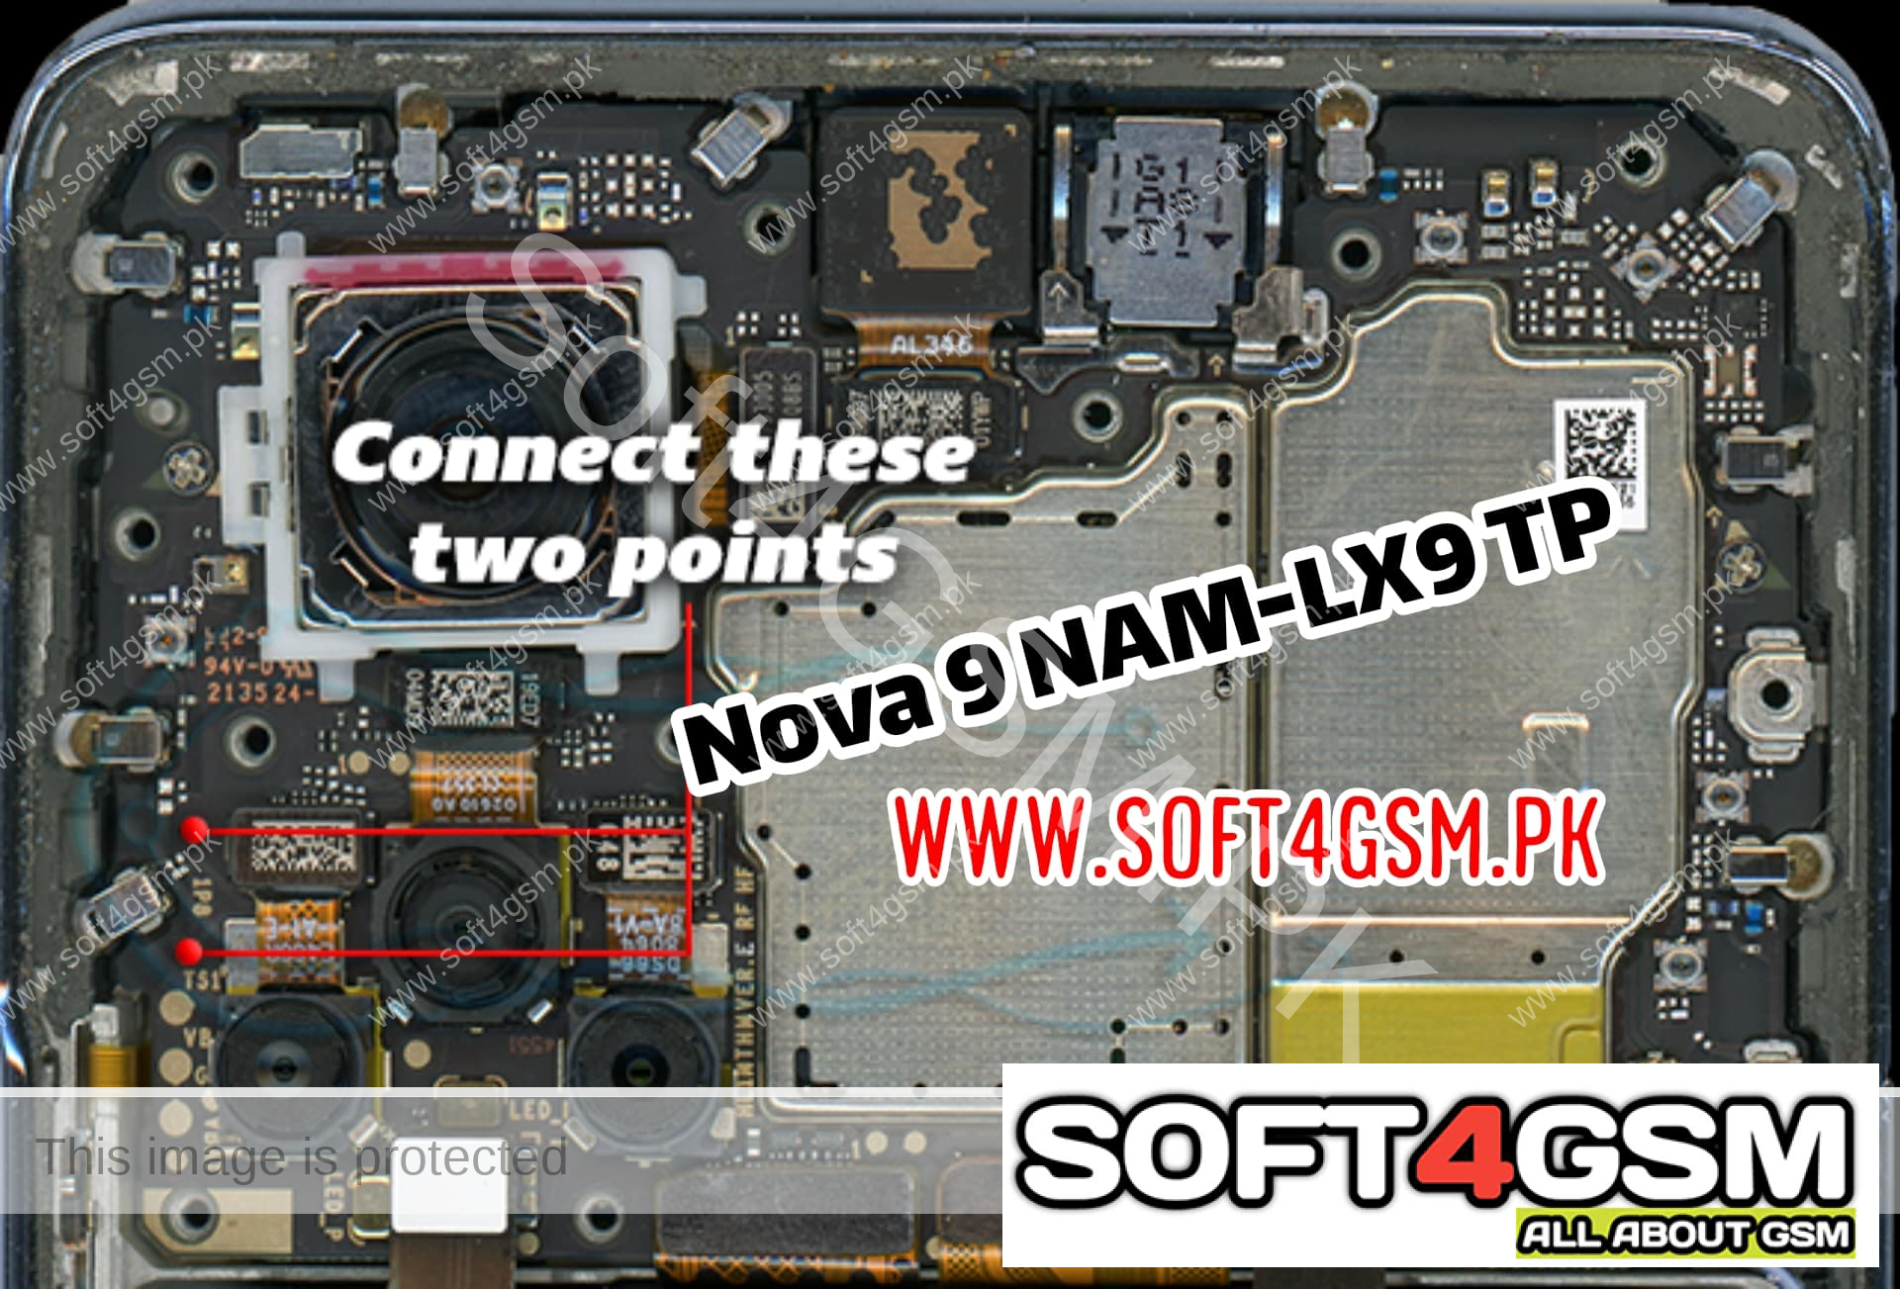 Huawei Nova 9 NAM-LX9 Test Point (TP)